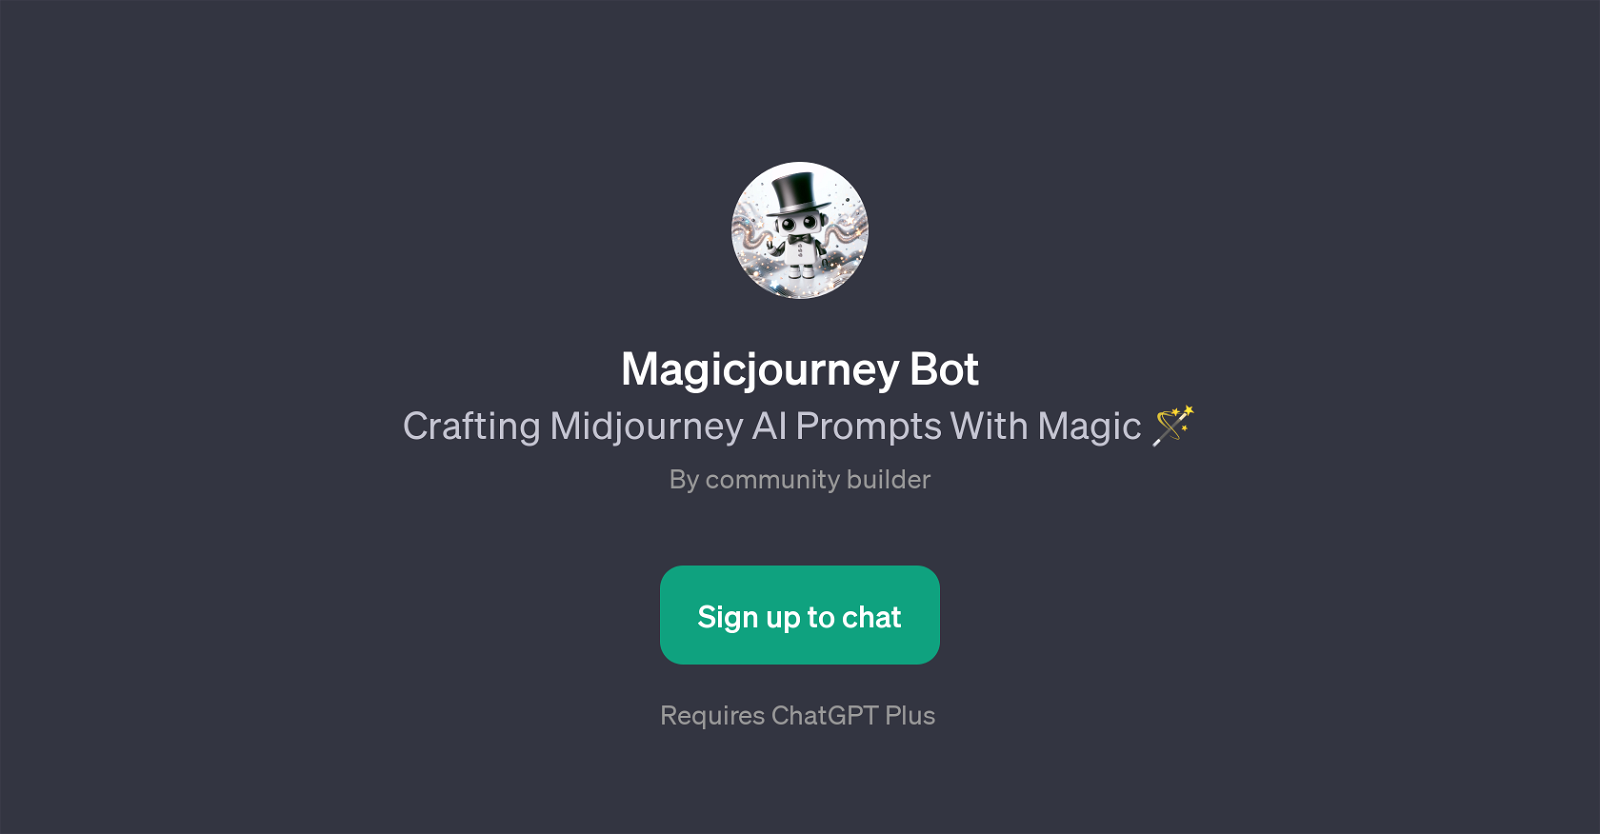 Magicjourney Bot website